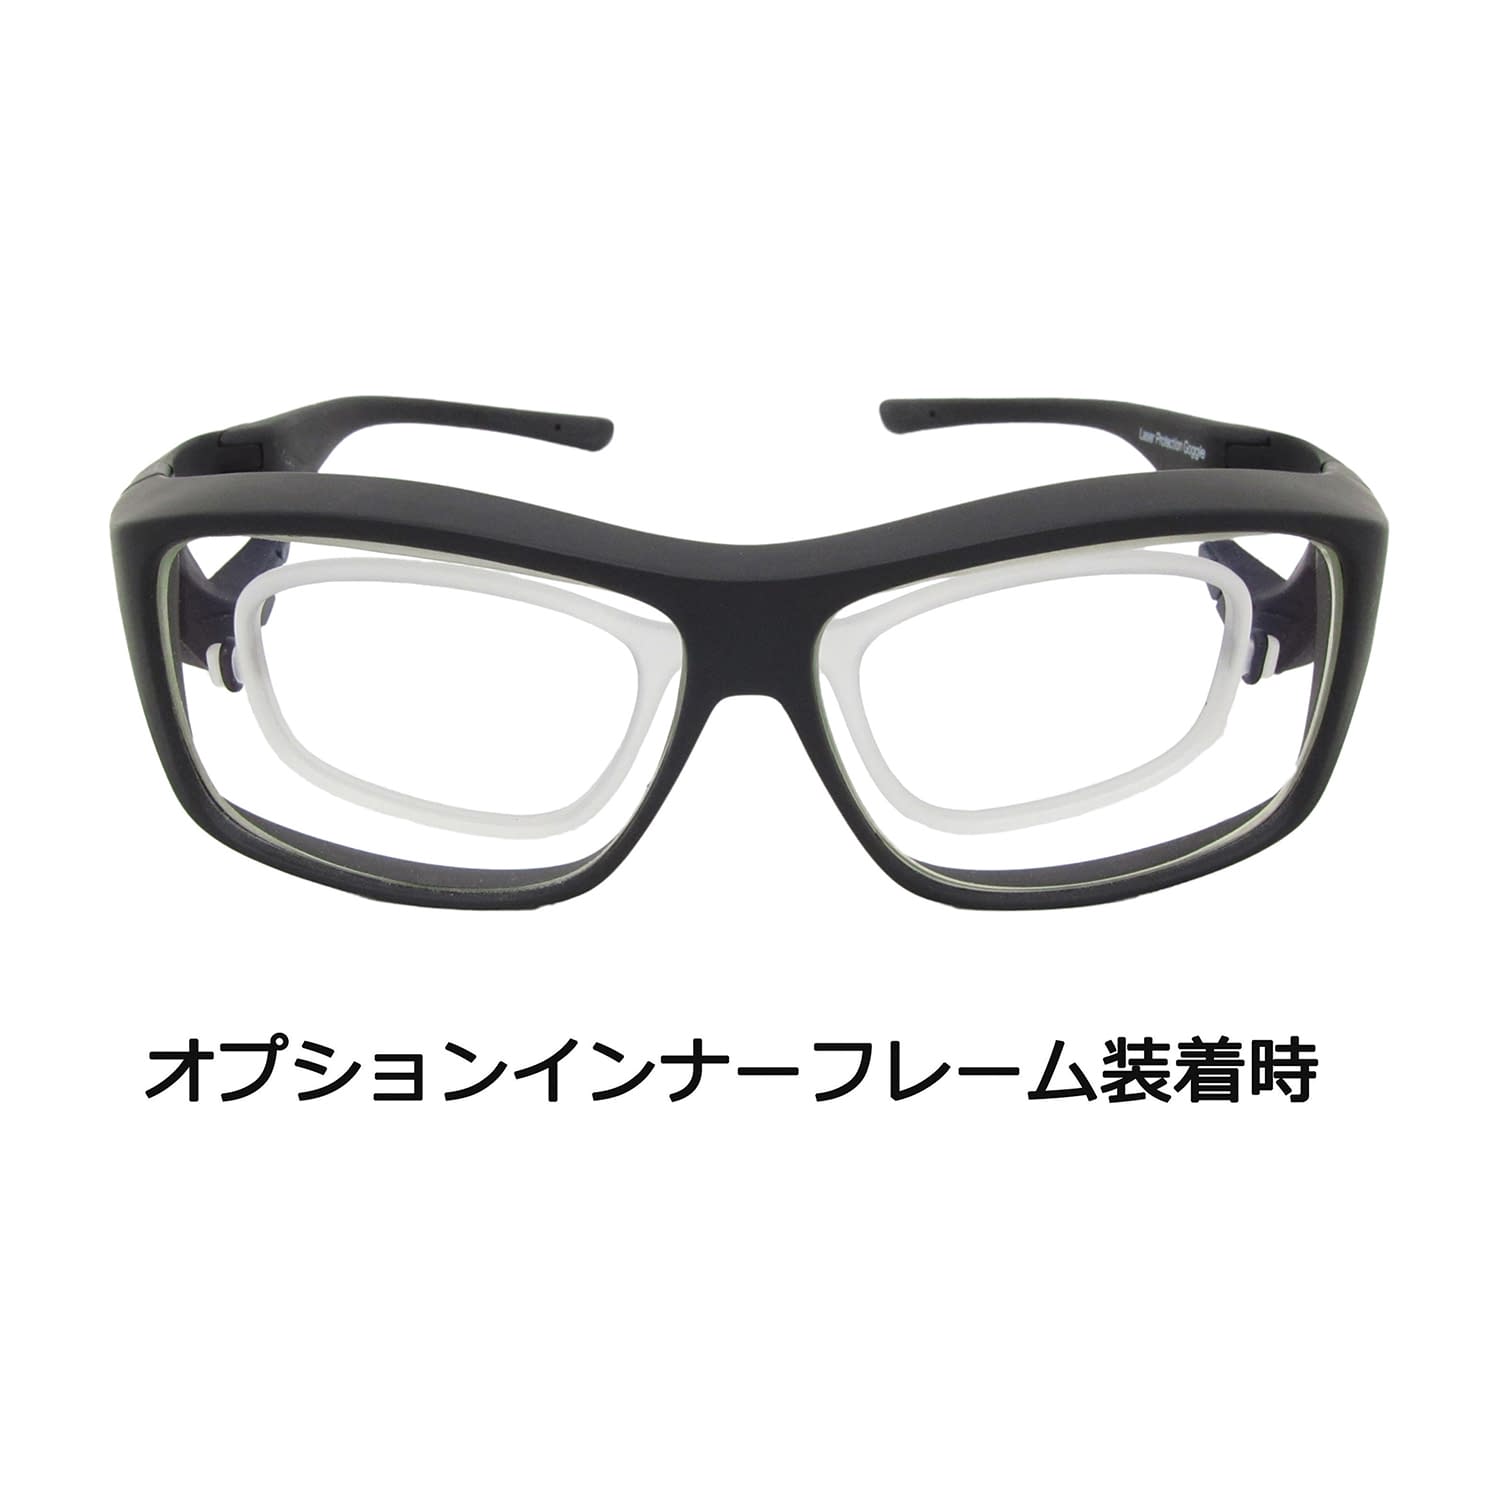 Dr．view 放射線防護用眼鏡AF DRV-X01 X線防護用眼鏡 25-3752-00【日本レンズ工業】(DRV-X01)(25-3752-00)